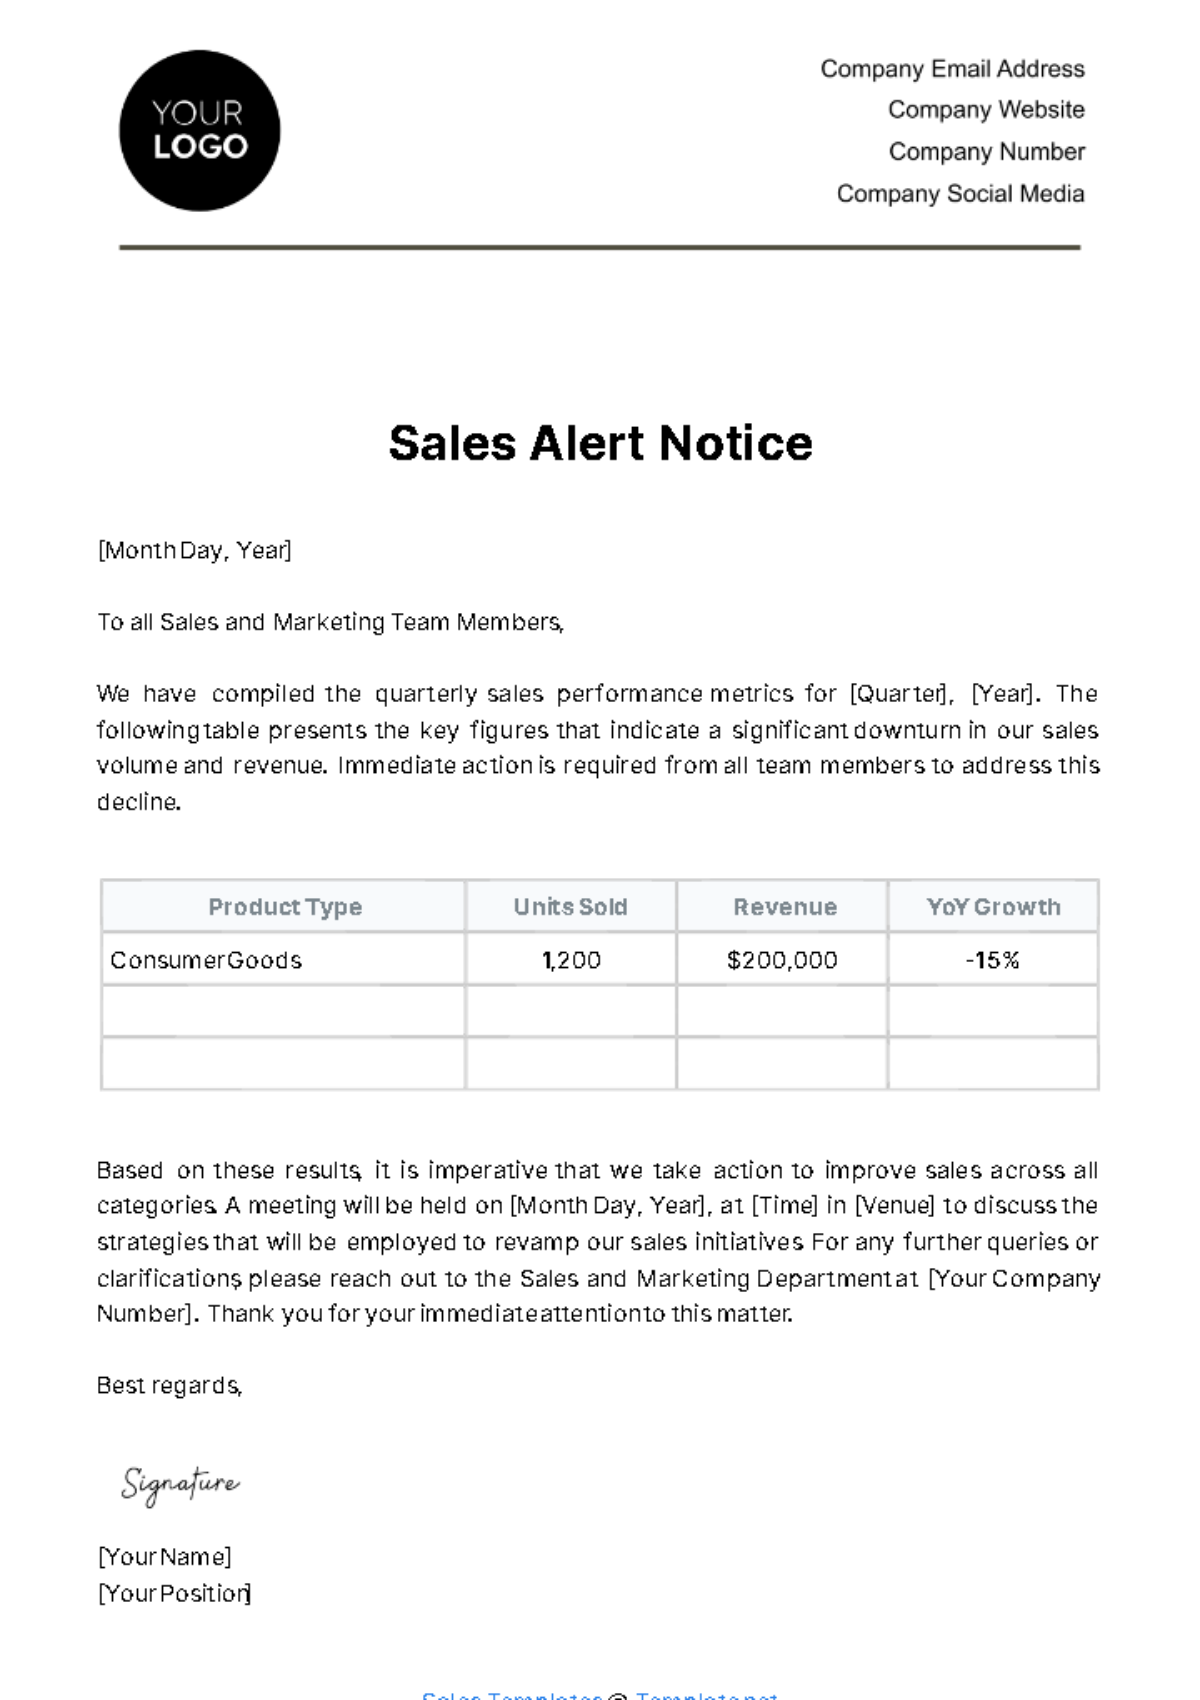 Free Sales Alert Notice Template